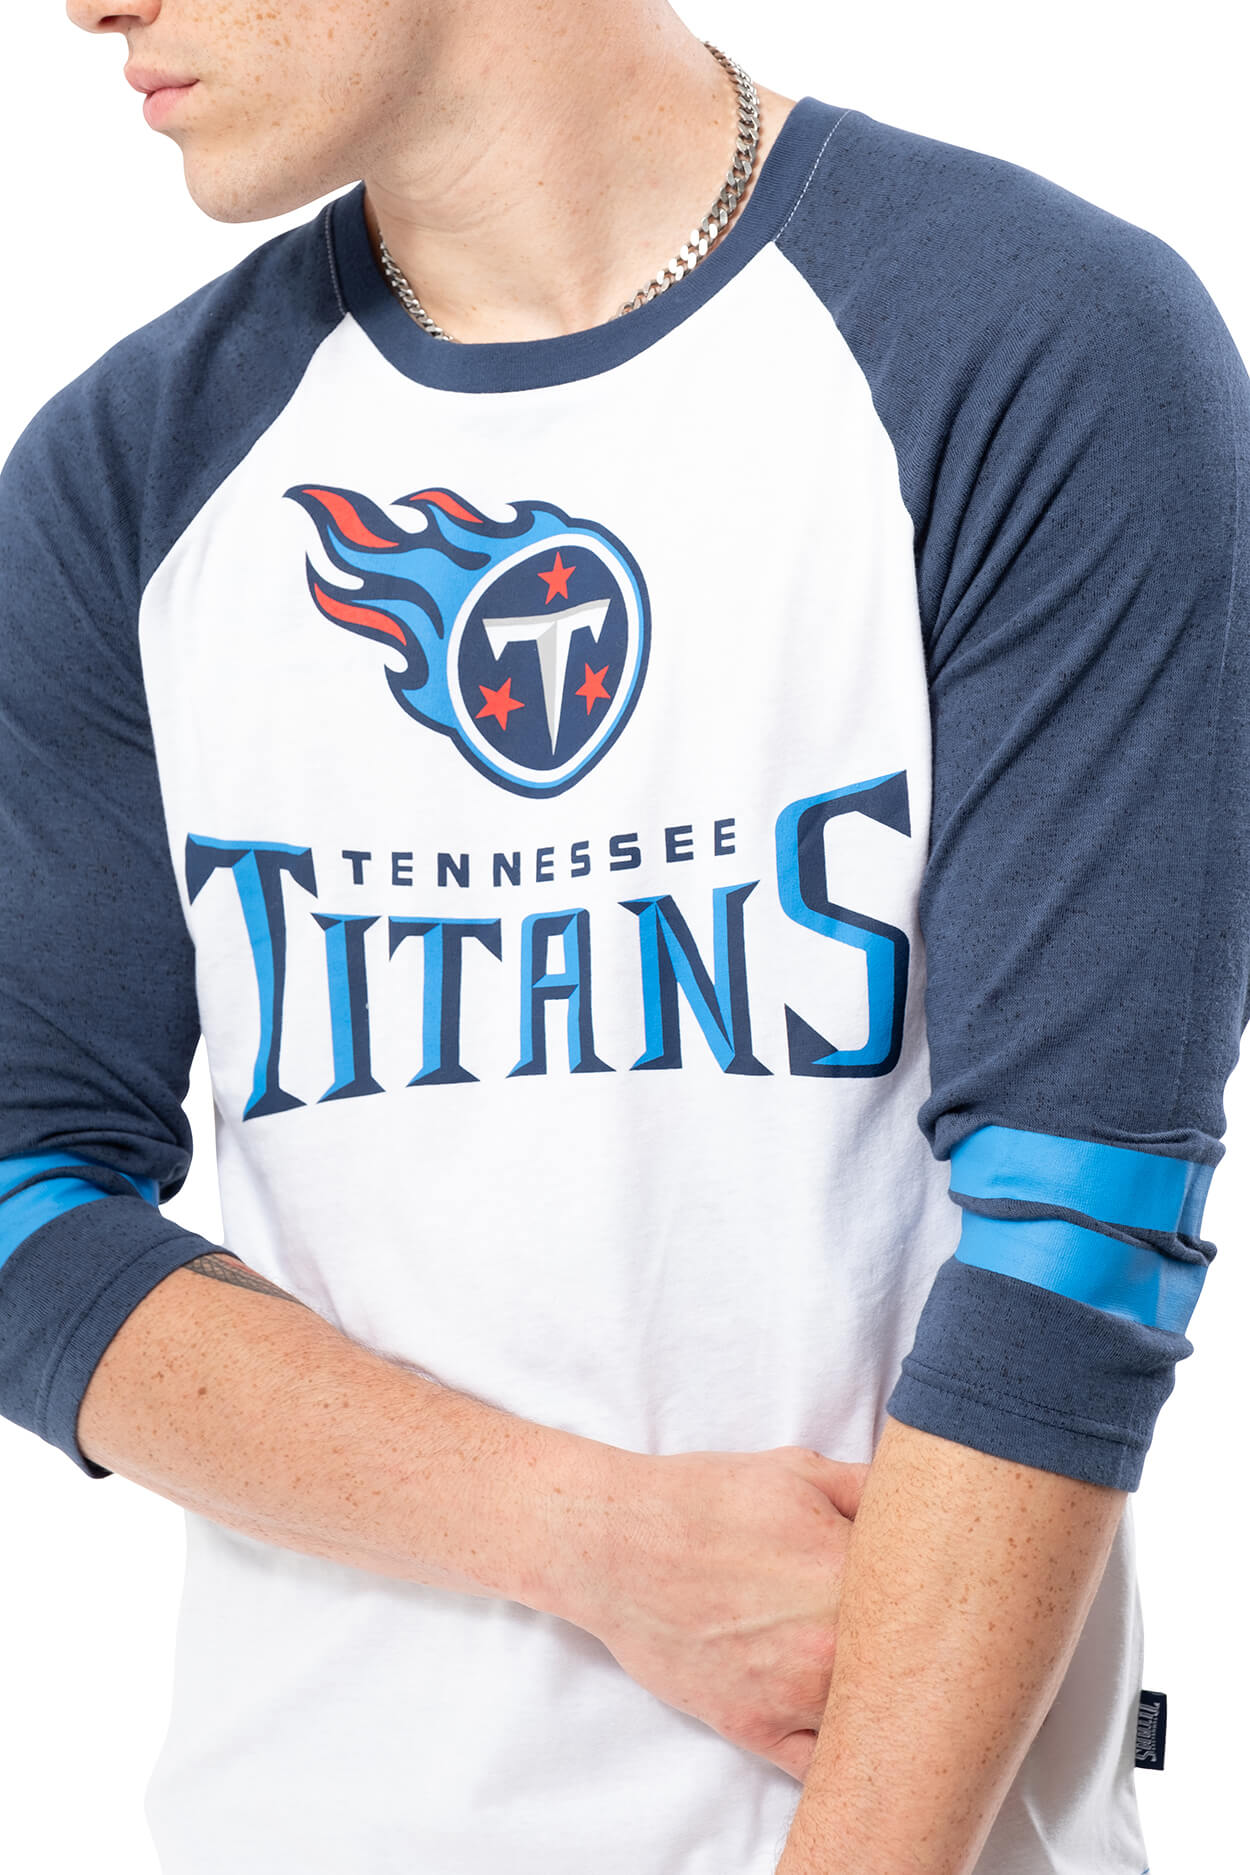 NFL Tennessee Titans Men's Baseball Tee|Tennessee Titans